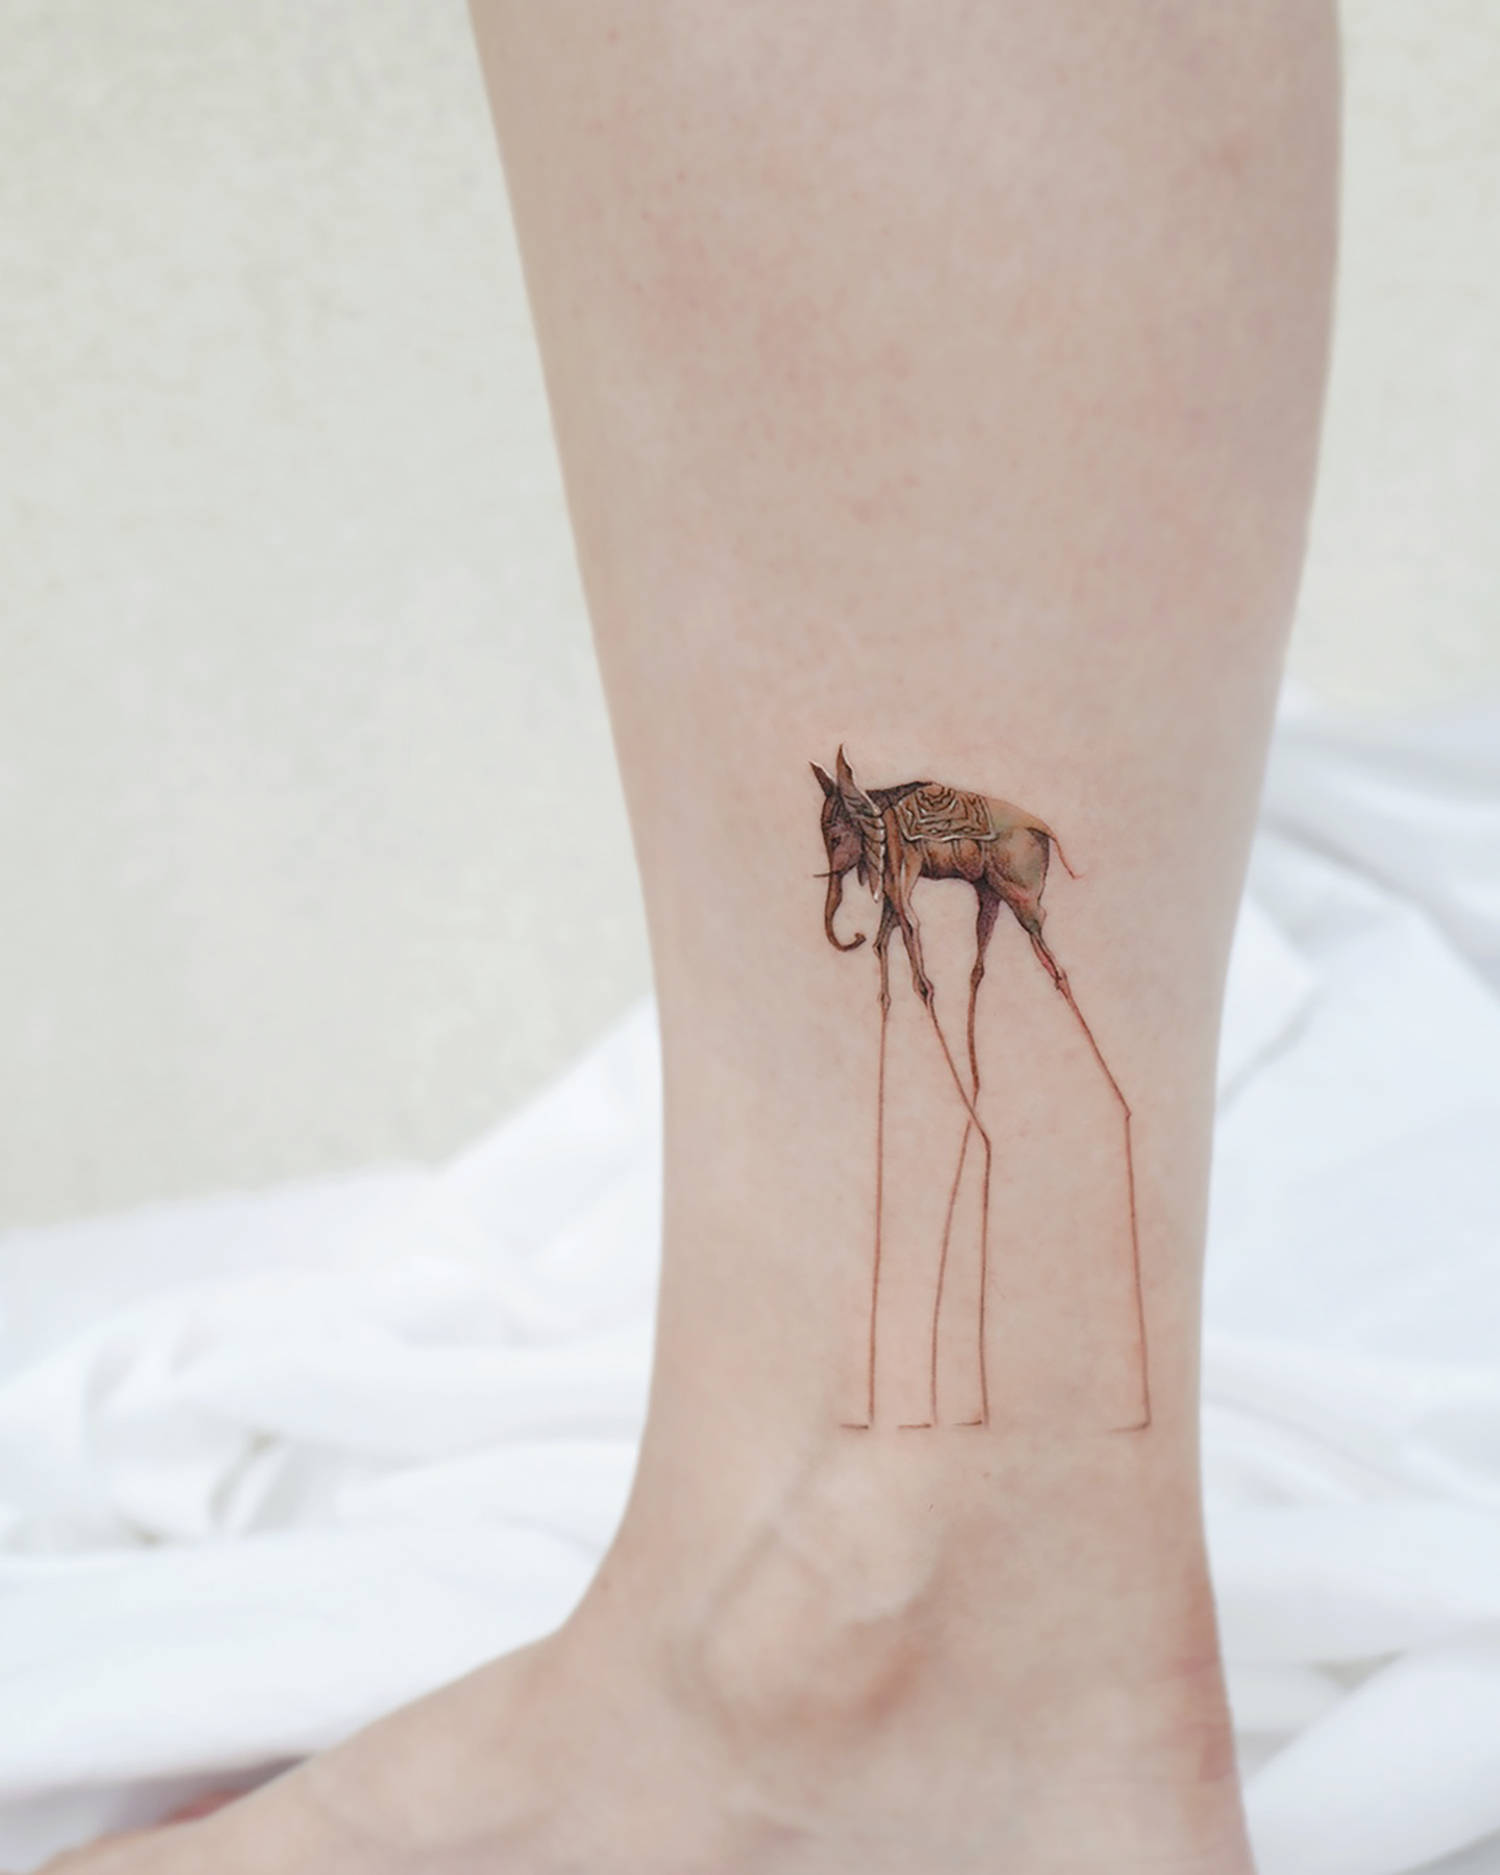 In tattoo form, Salvador Dali The Elephants